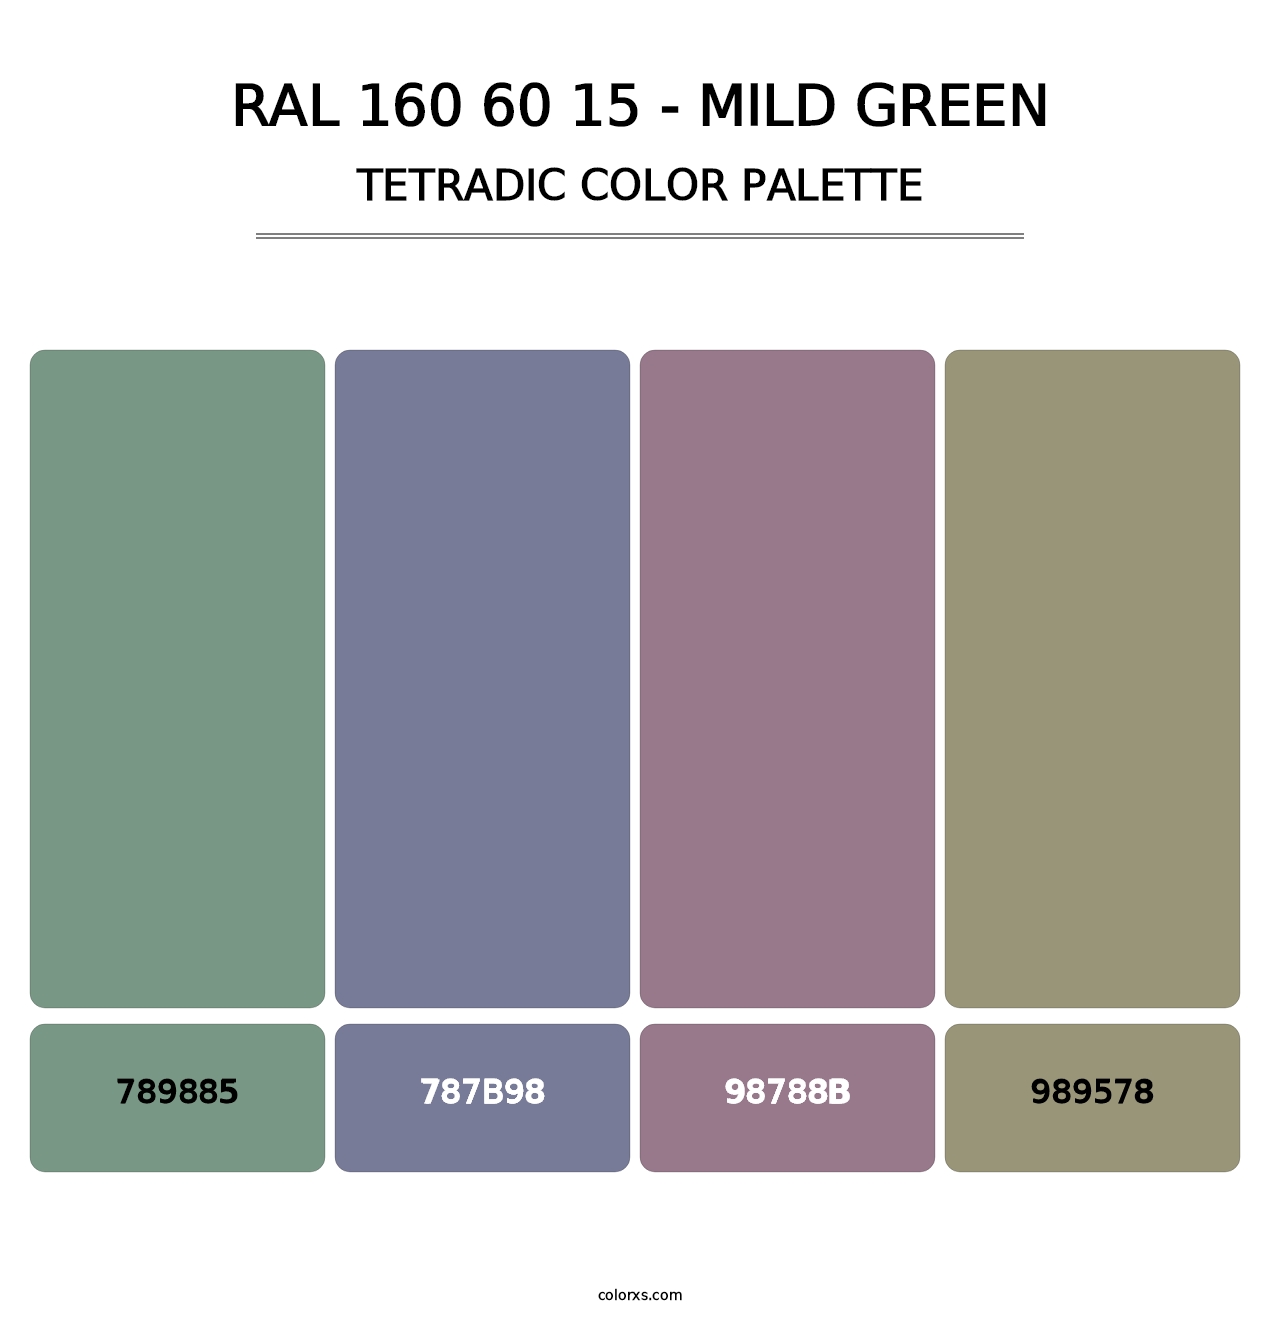 RAL 160 60 15 - Mild Green - Tetradic Color Palette